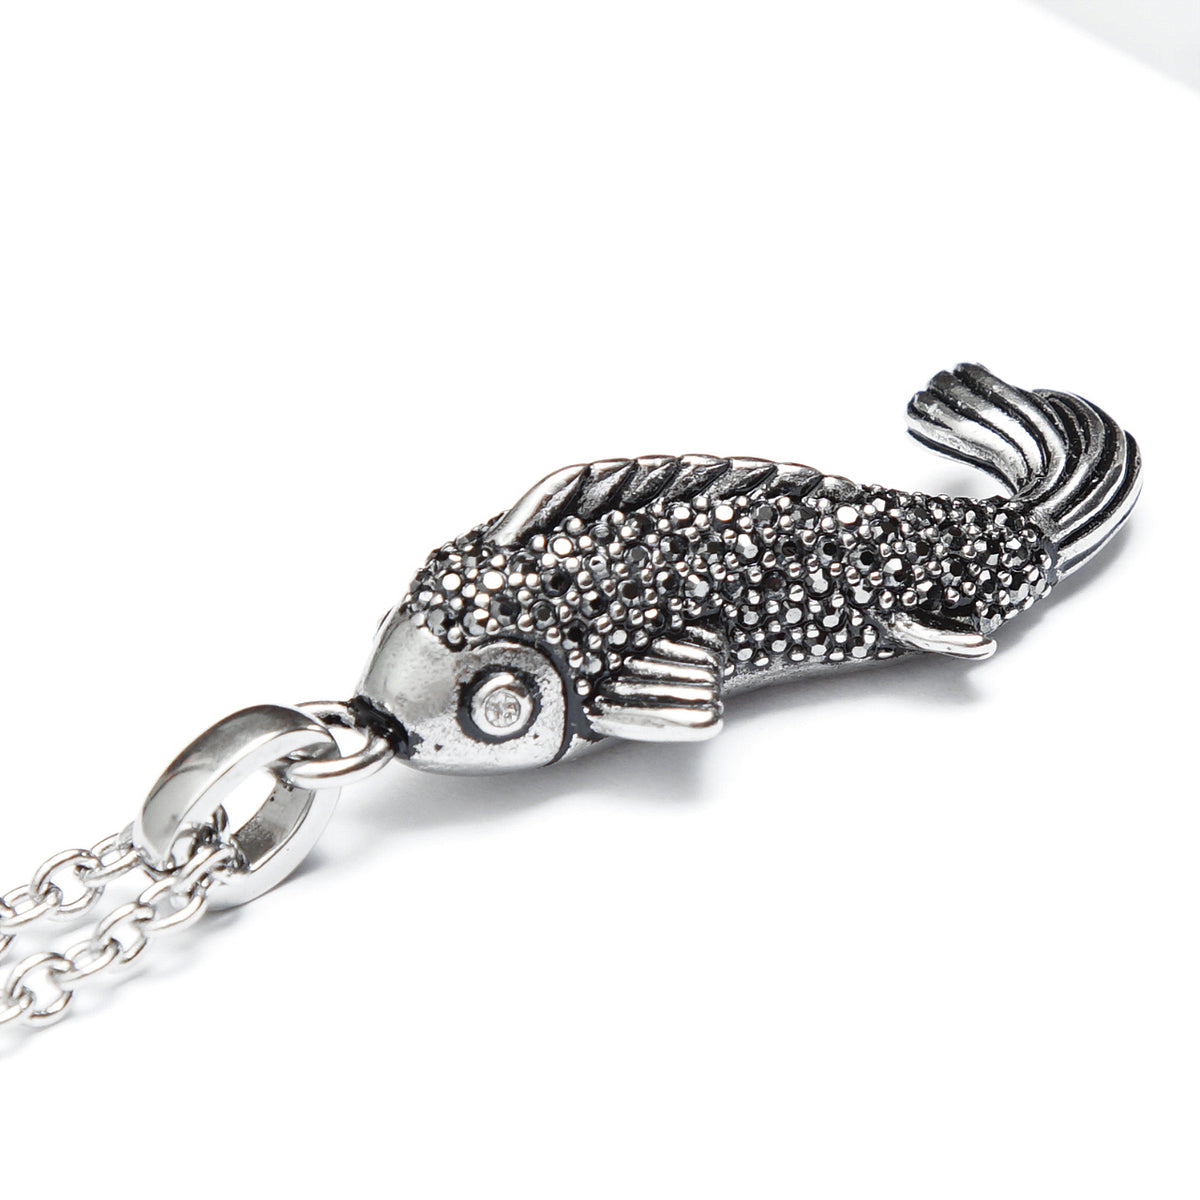 Black &amp; White Sparkling Koi Fish Necklace